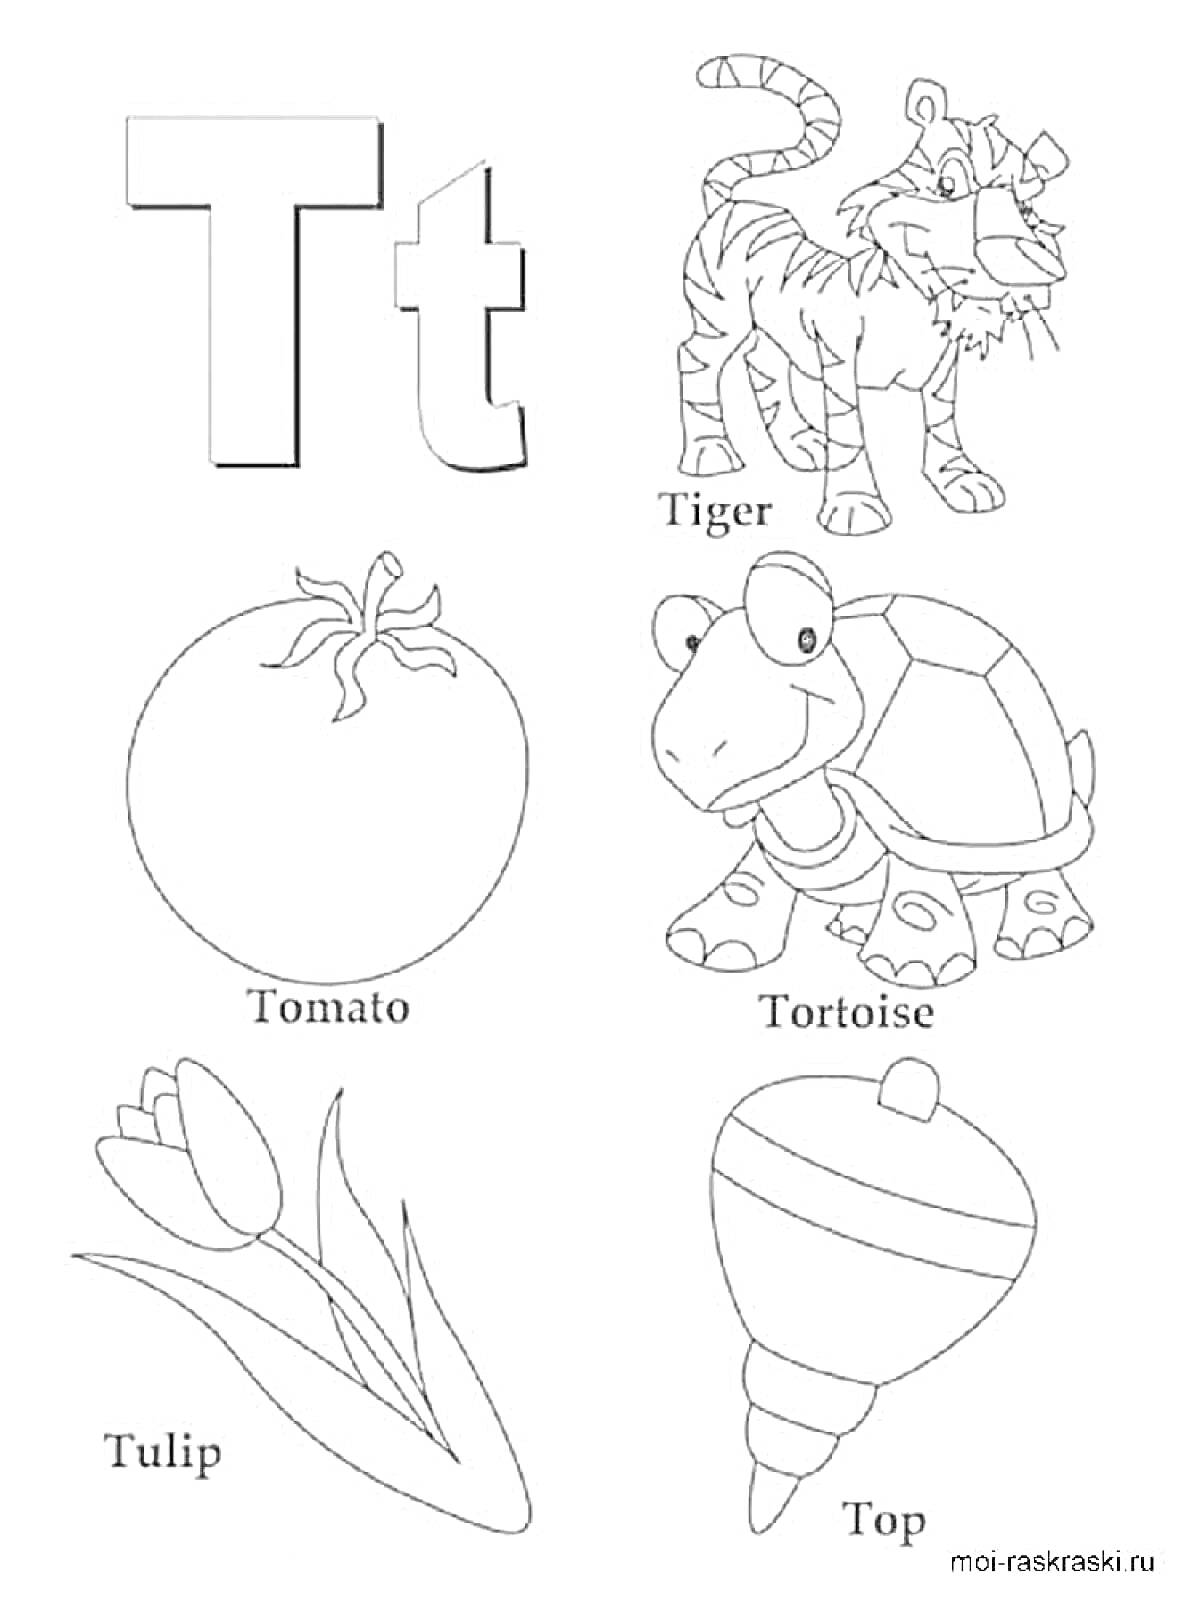 Английский алфавит - буква T: тигр, помидор, черепаха, тюльпан, волчок